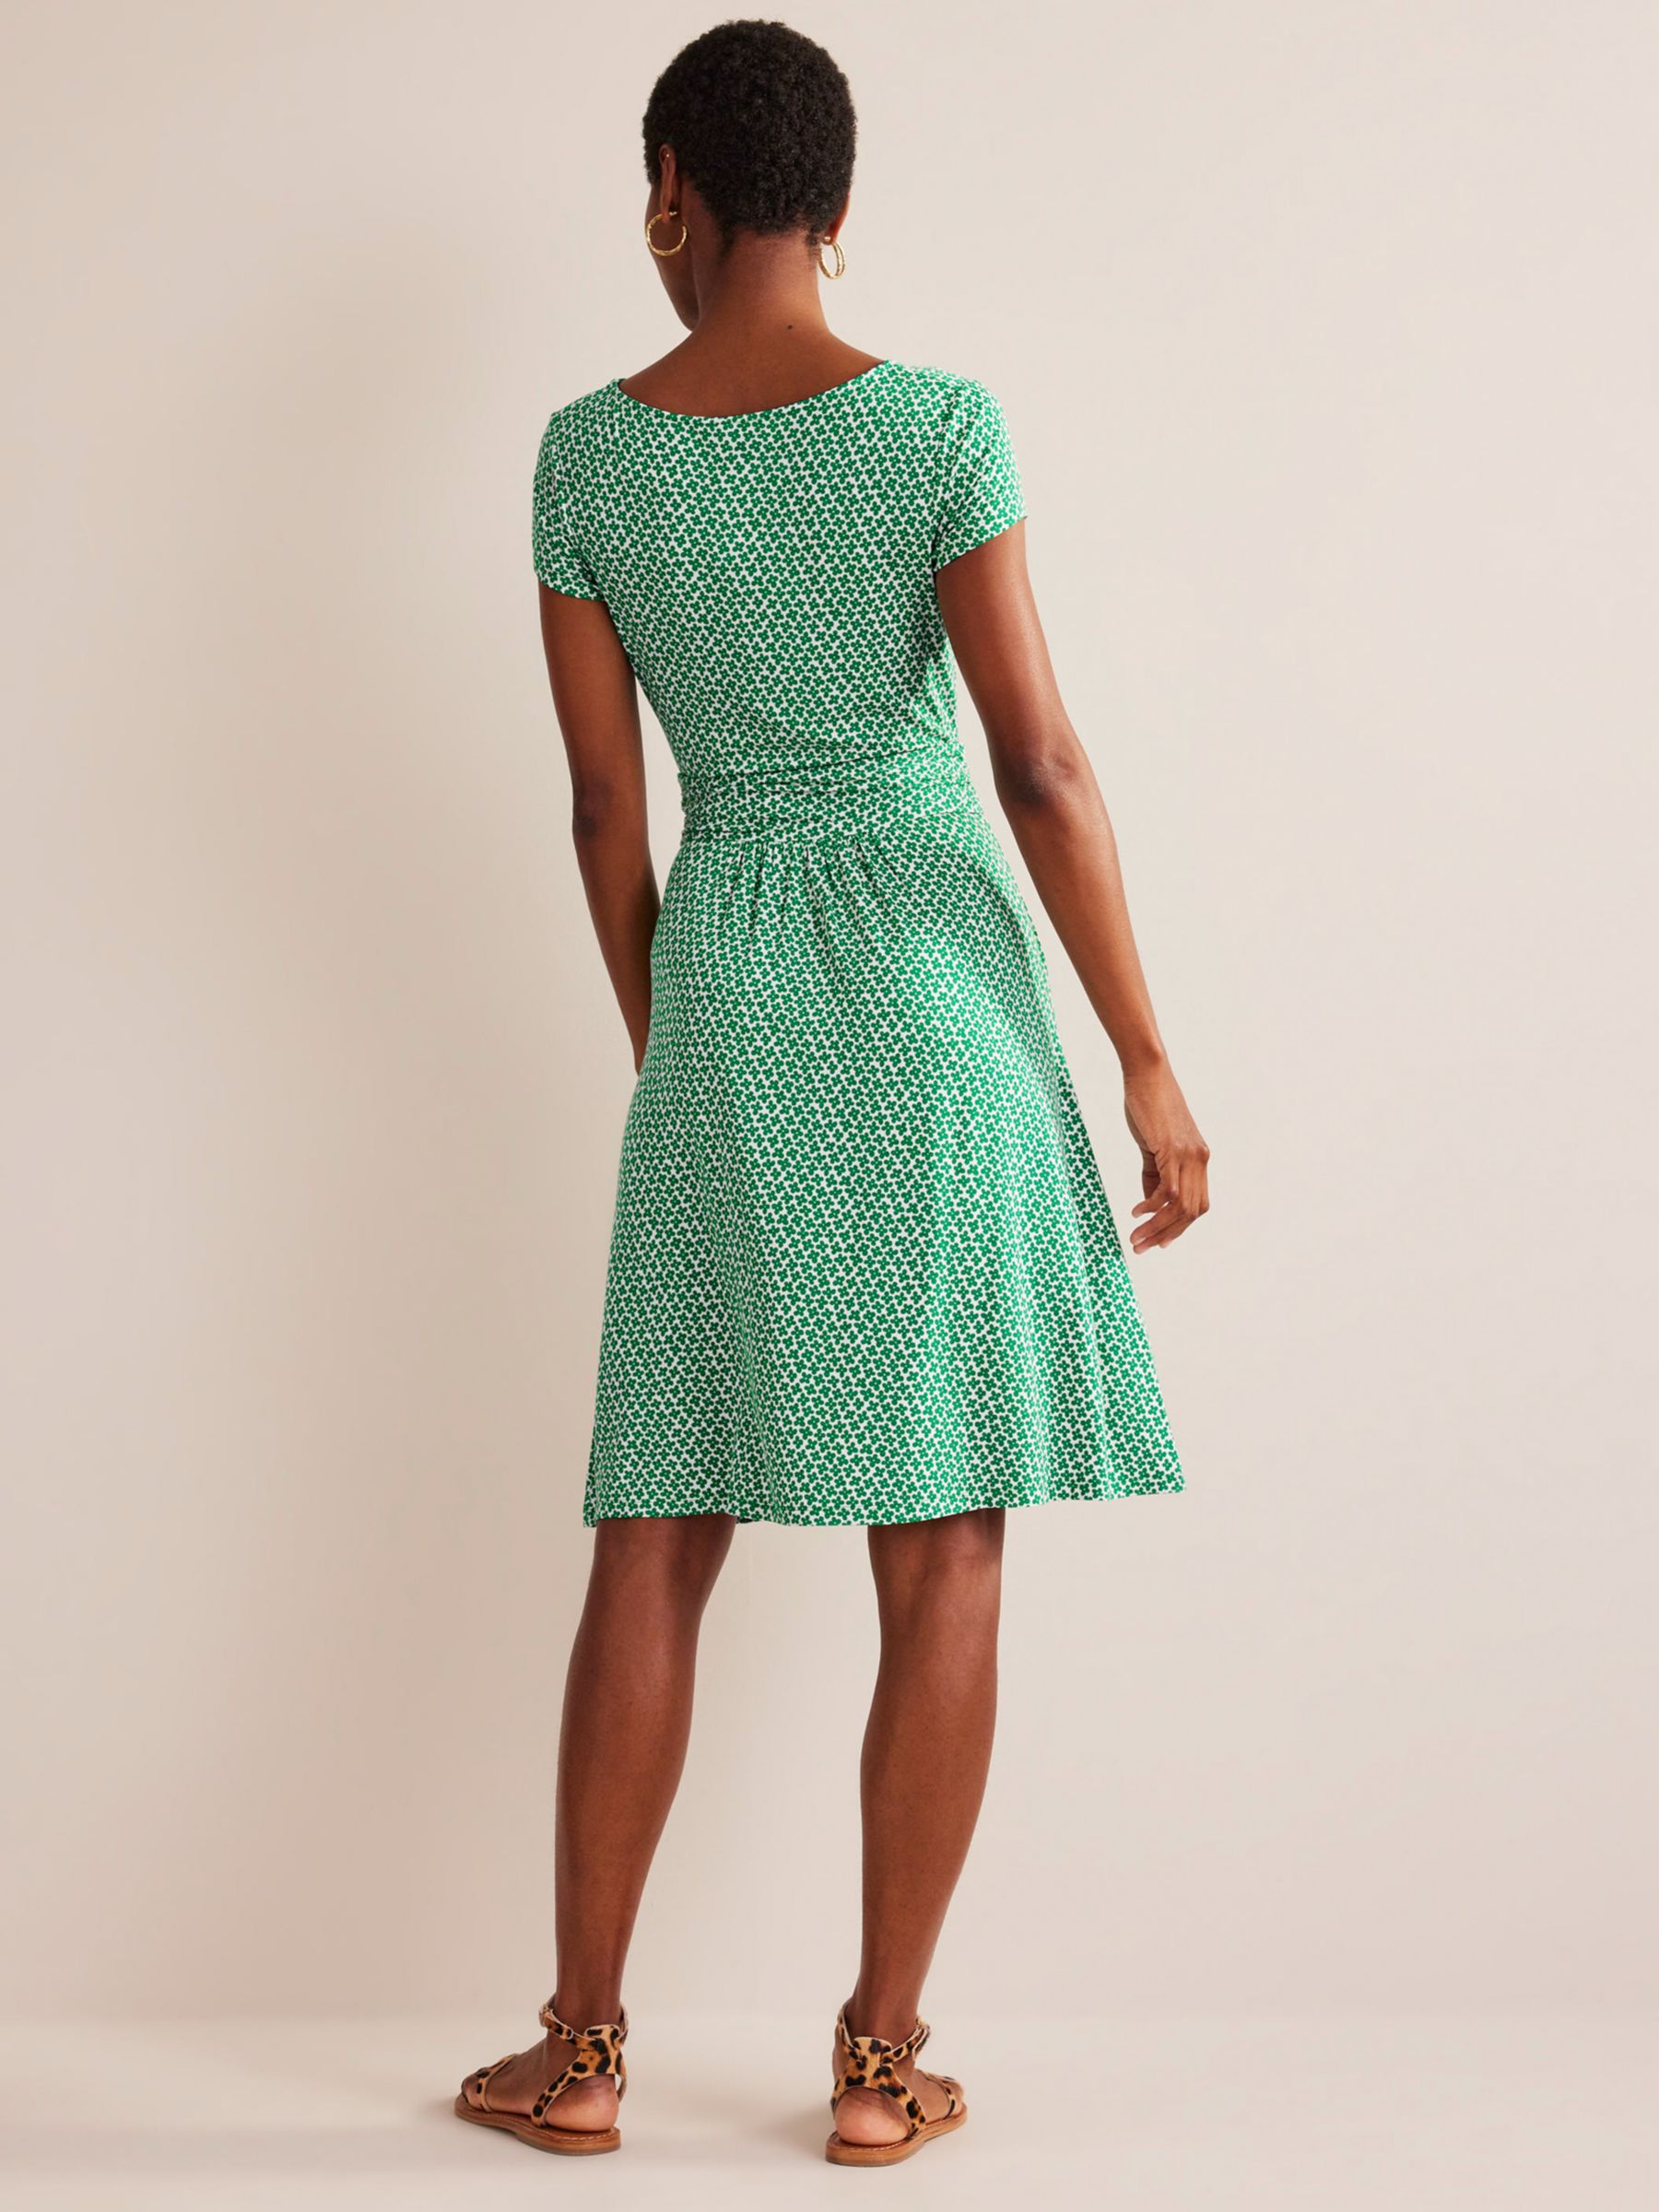 Boden Amelie Daisy Print Jersey Dress, Meadow Green, 14